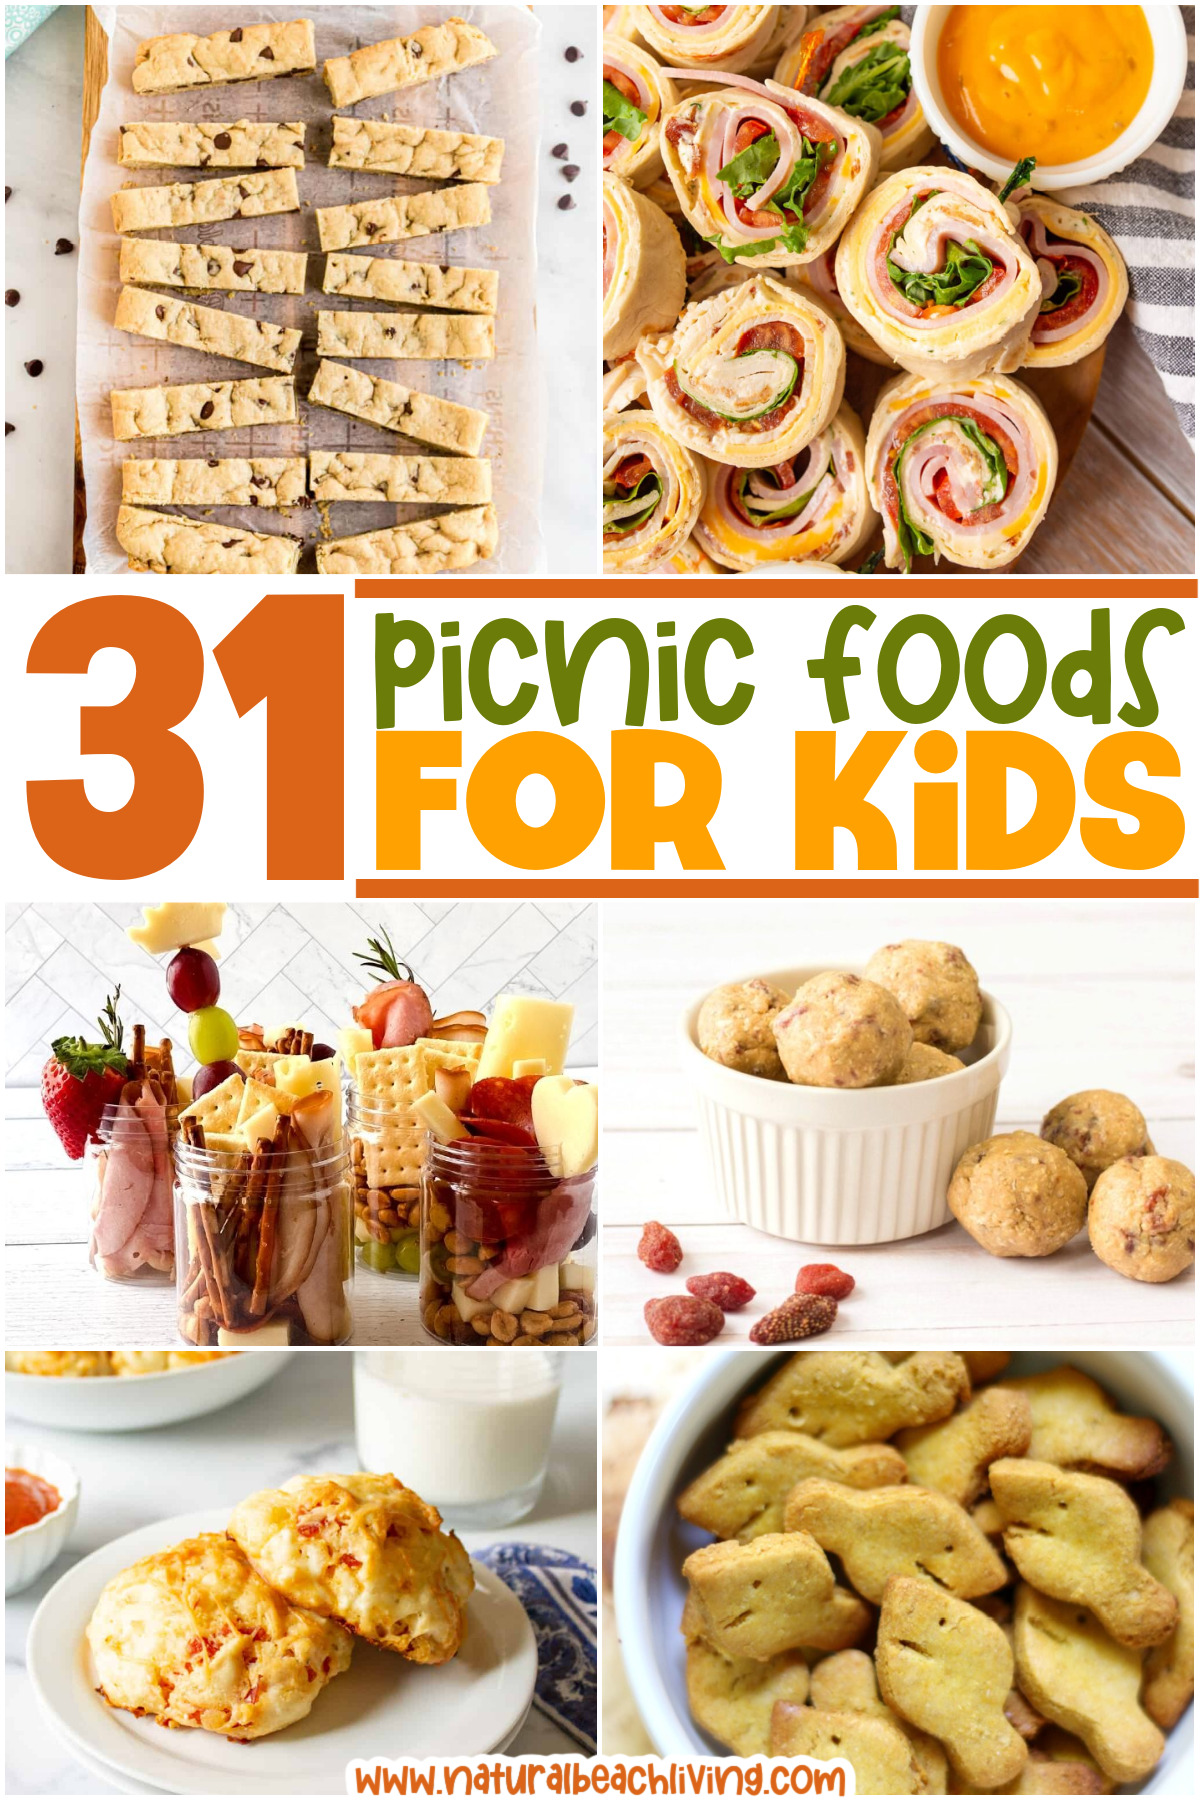 https://www.naturalbeachliving.com/wp-content/uploads/2022/03/picnic-foods-for-kids-short-pin-1.jpg